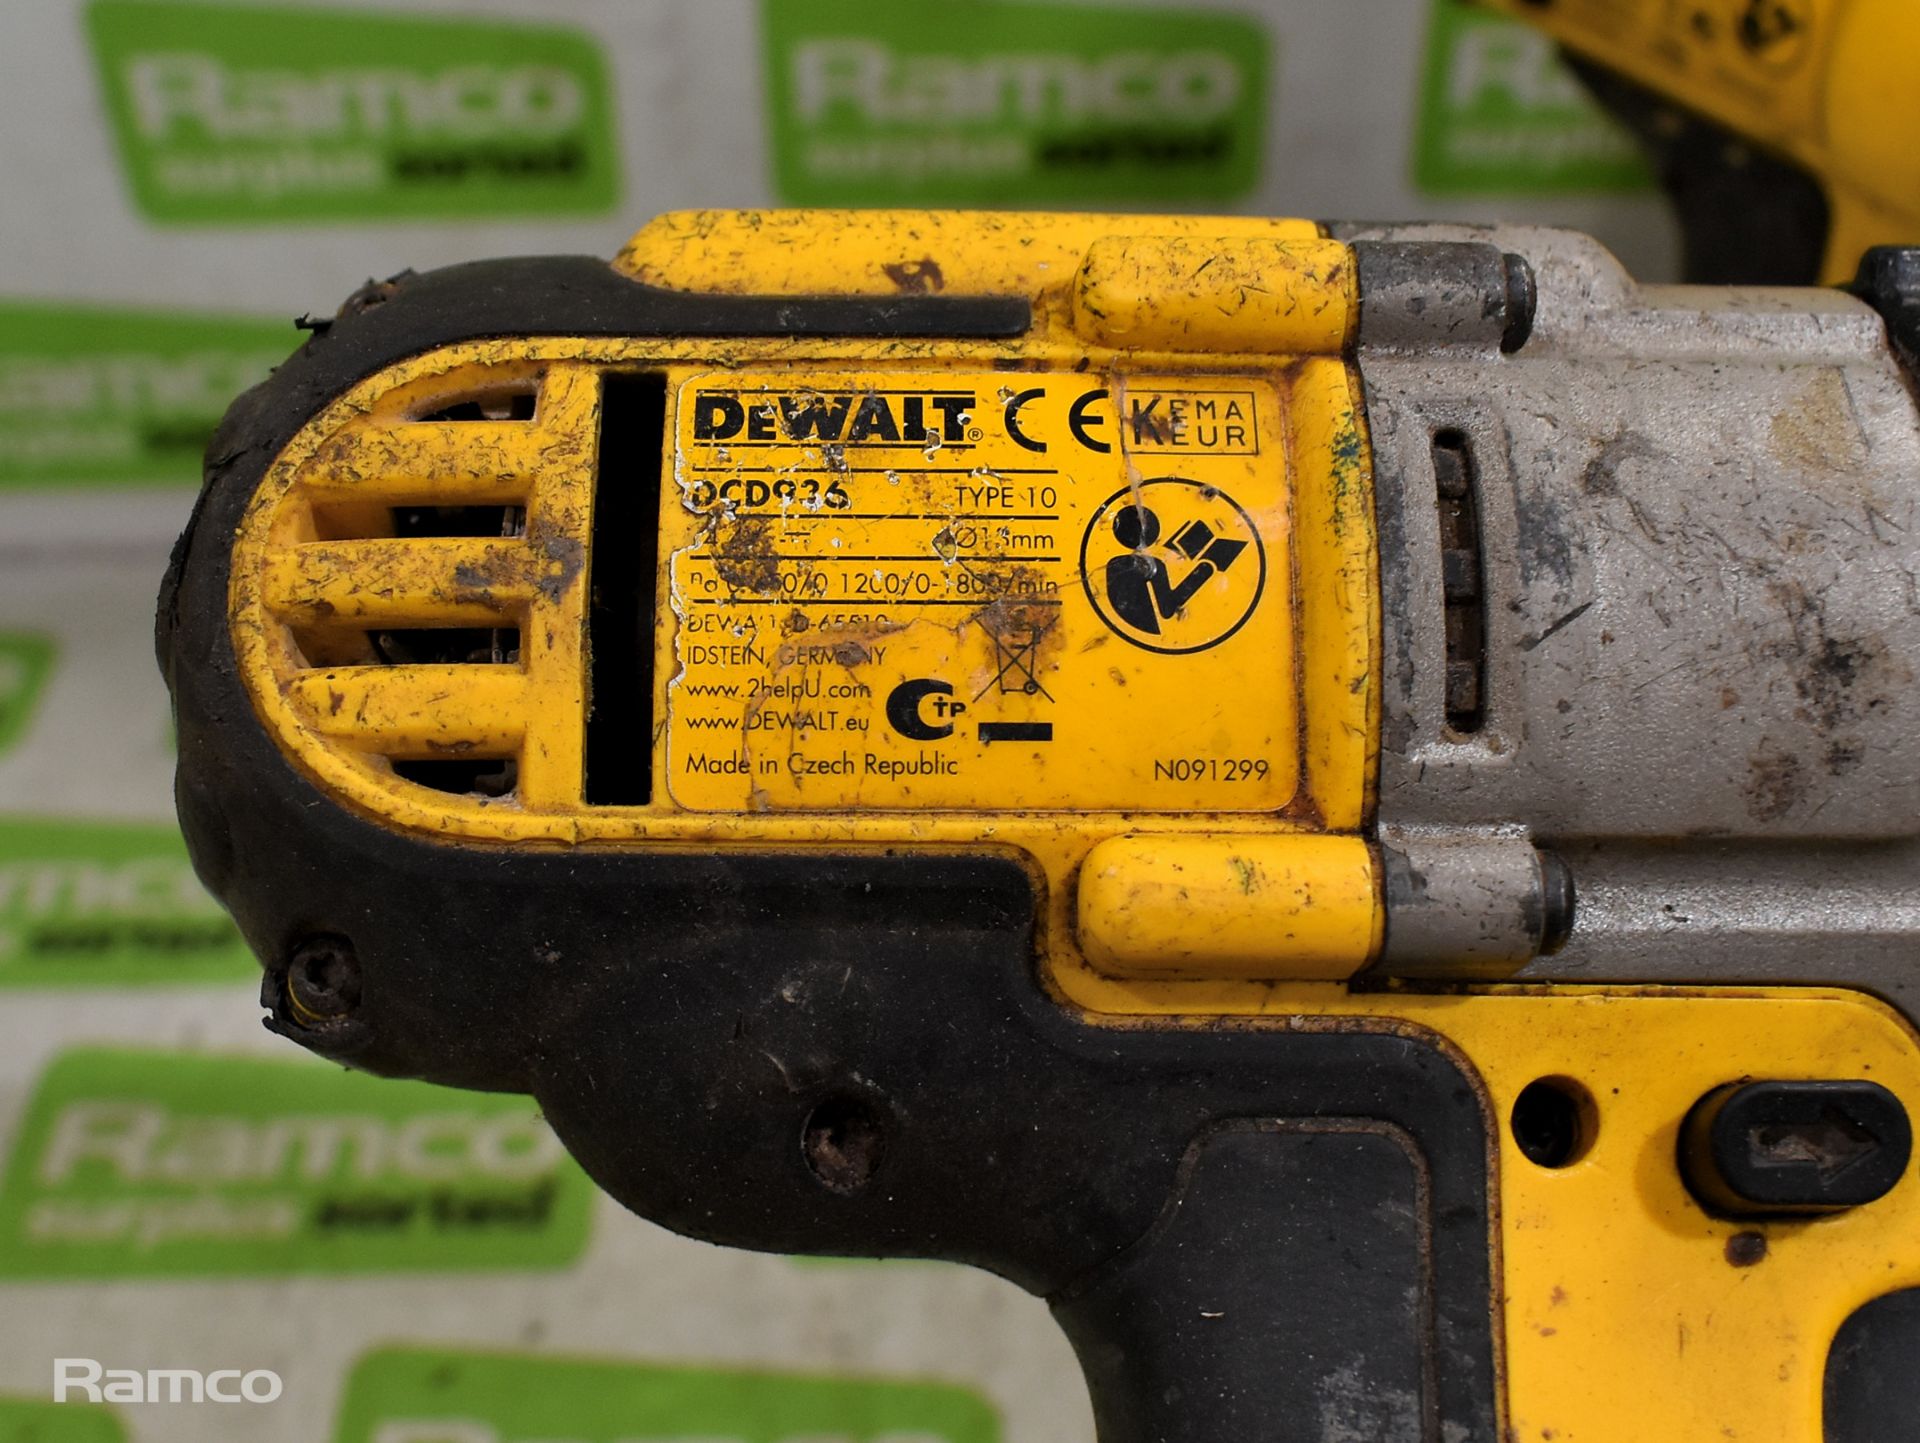 DeWalt drills and batteries - AS SPARES OR REPAIRS - Image 3 of 15